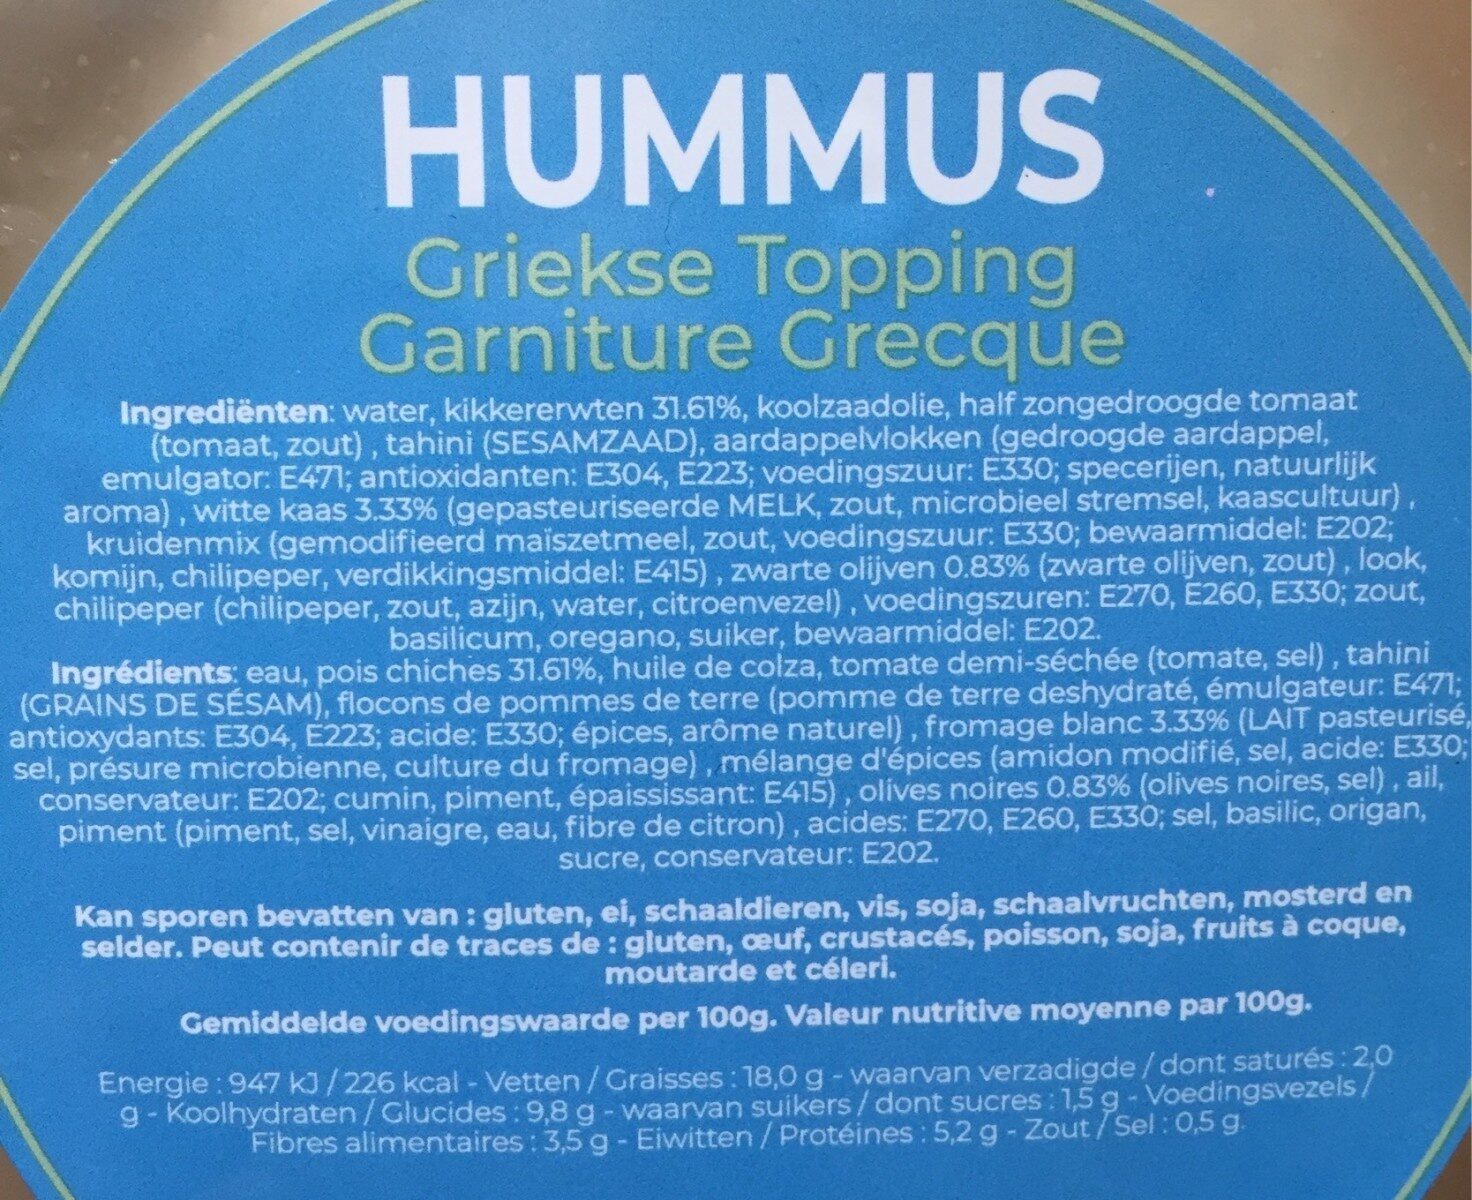 Hummus - Griekse topping - Tableau nutritionnel